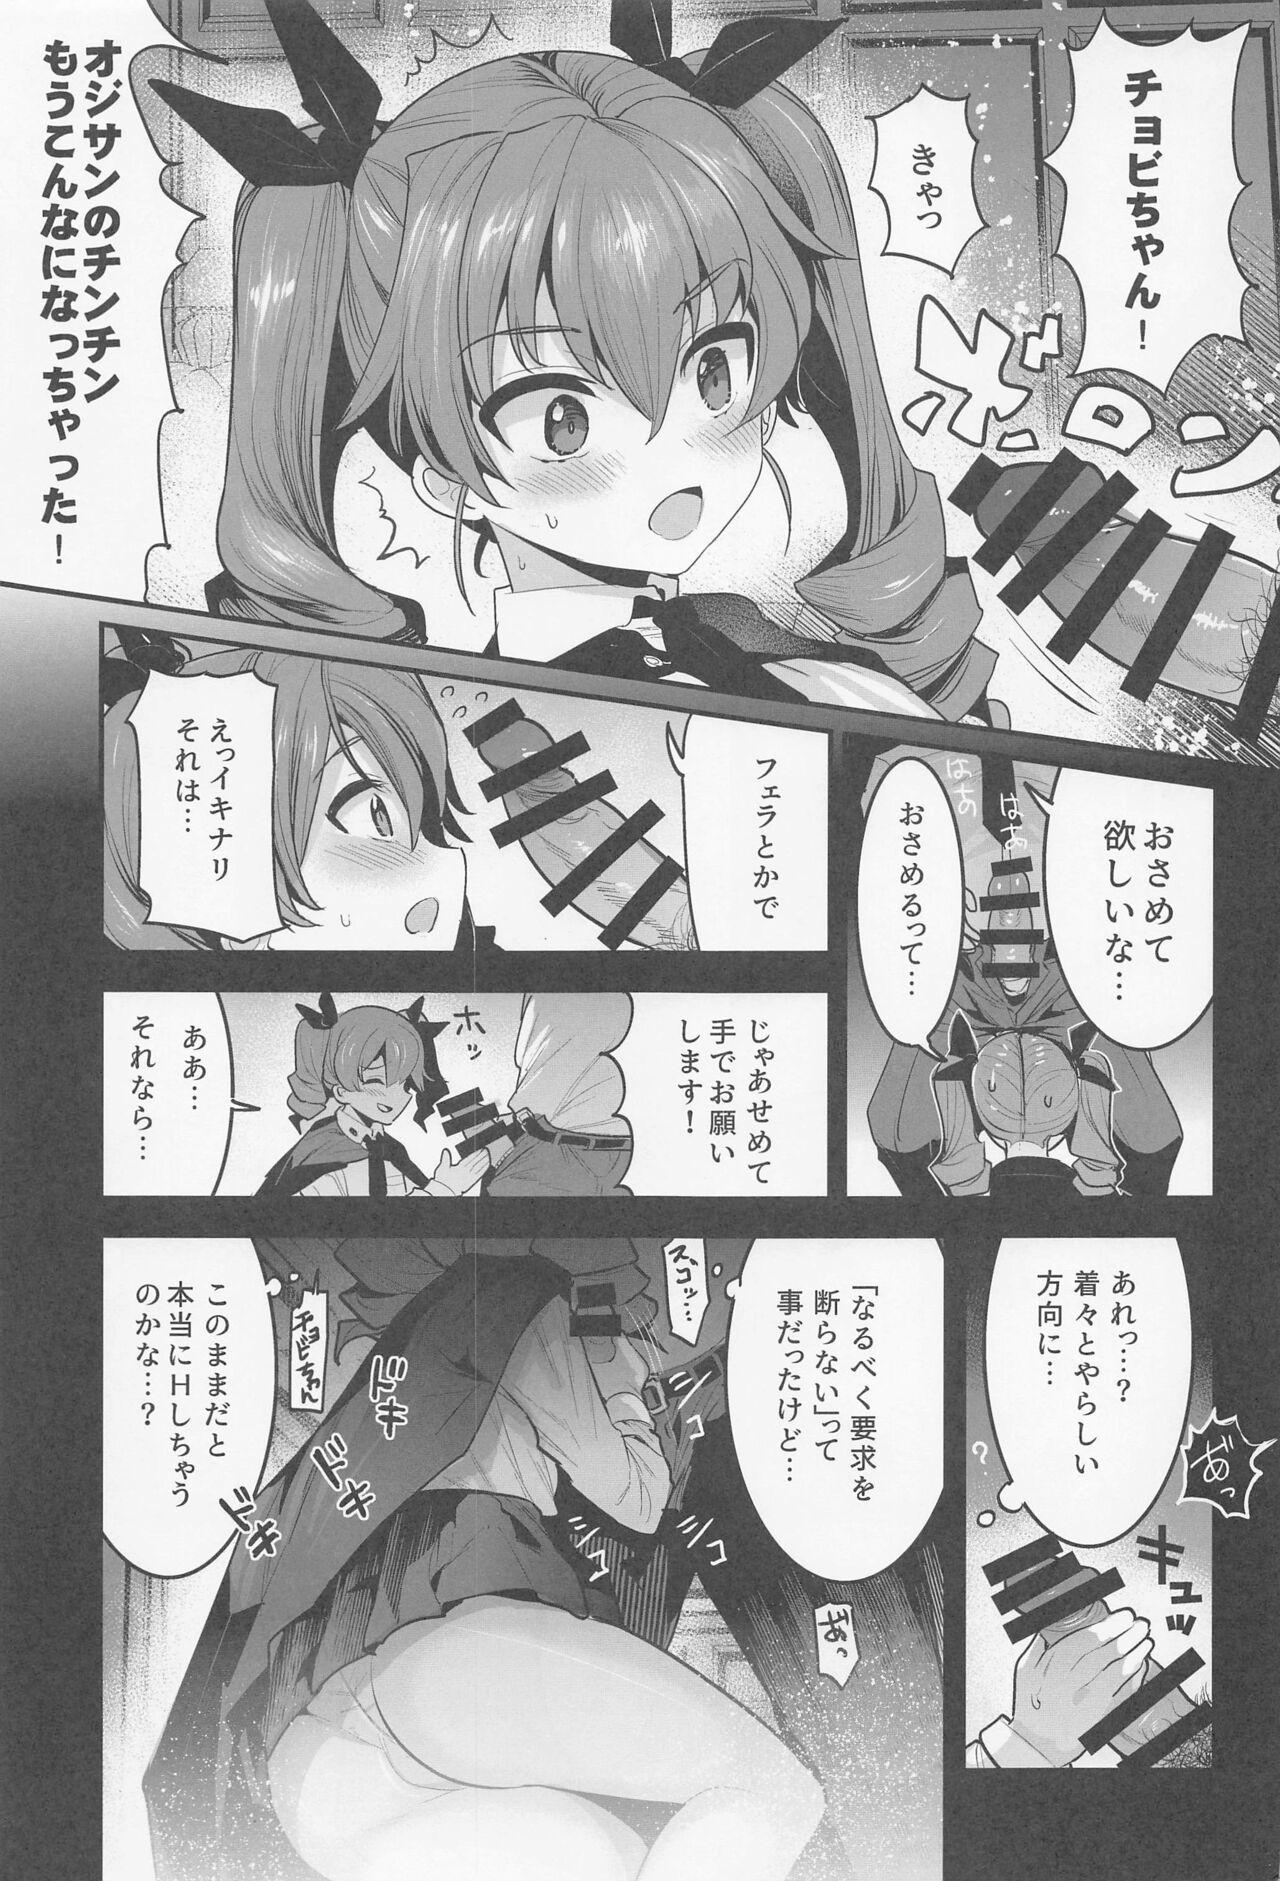 Bisex anchobi dogezadeonegaishitaraippatsuyarasetekuremashita - Girls und panzer Strapon - Page 6